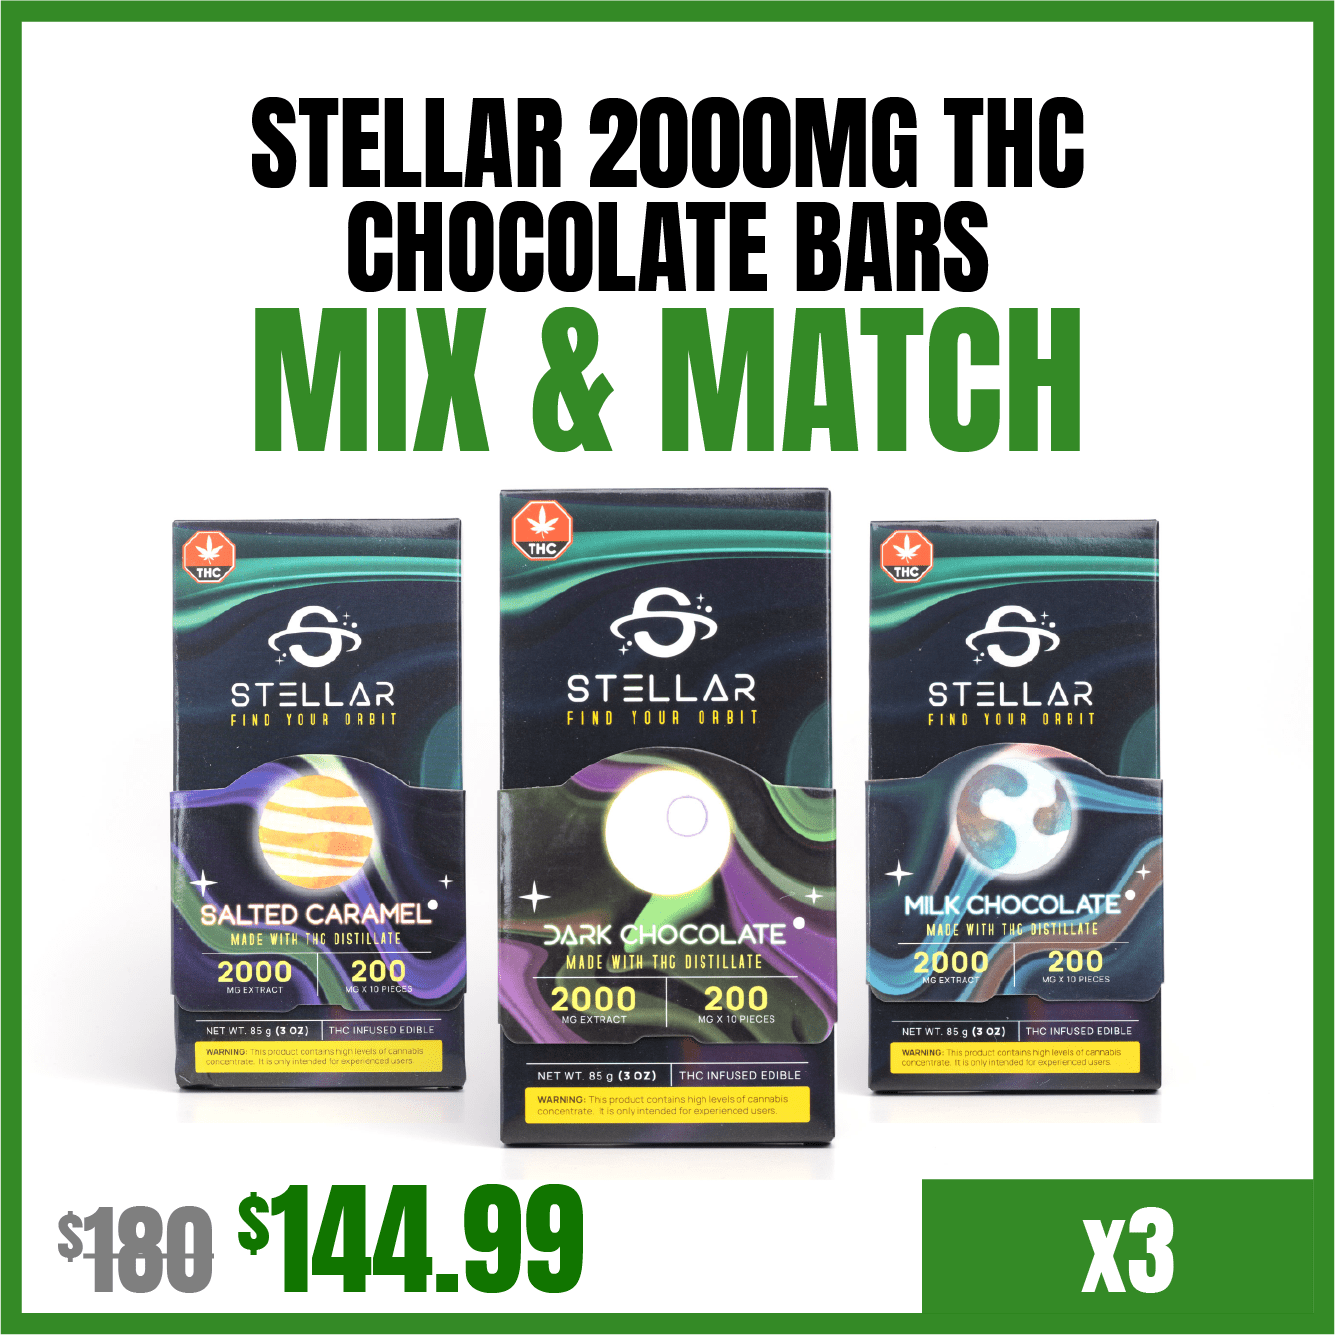 Stellar 2000mg THC Chocolate Bars Mix & Match